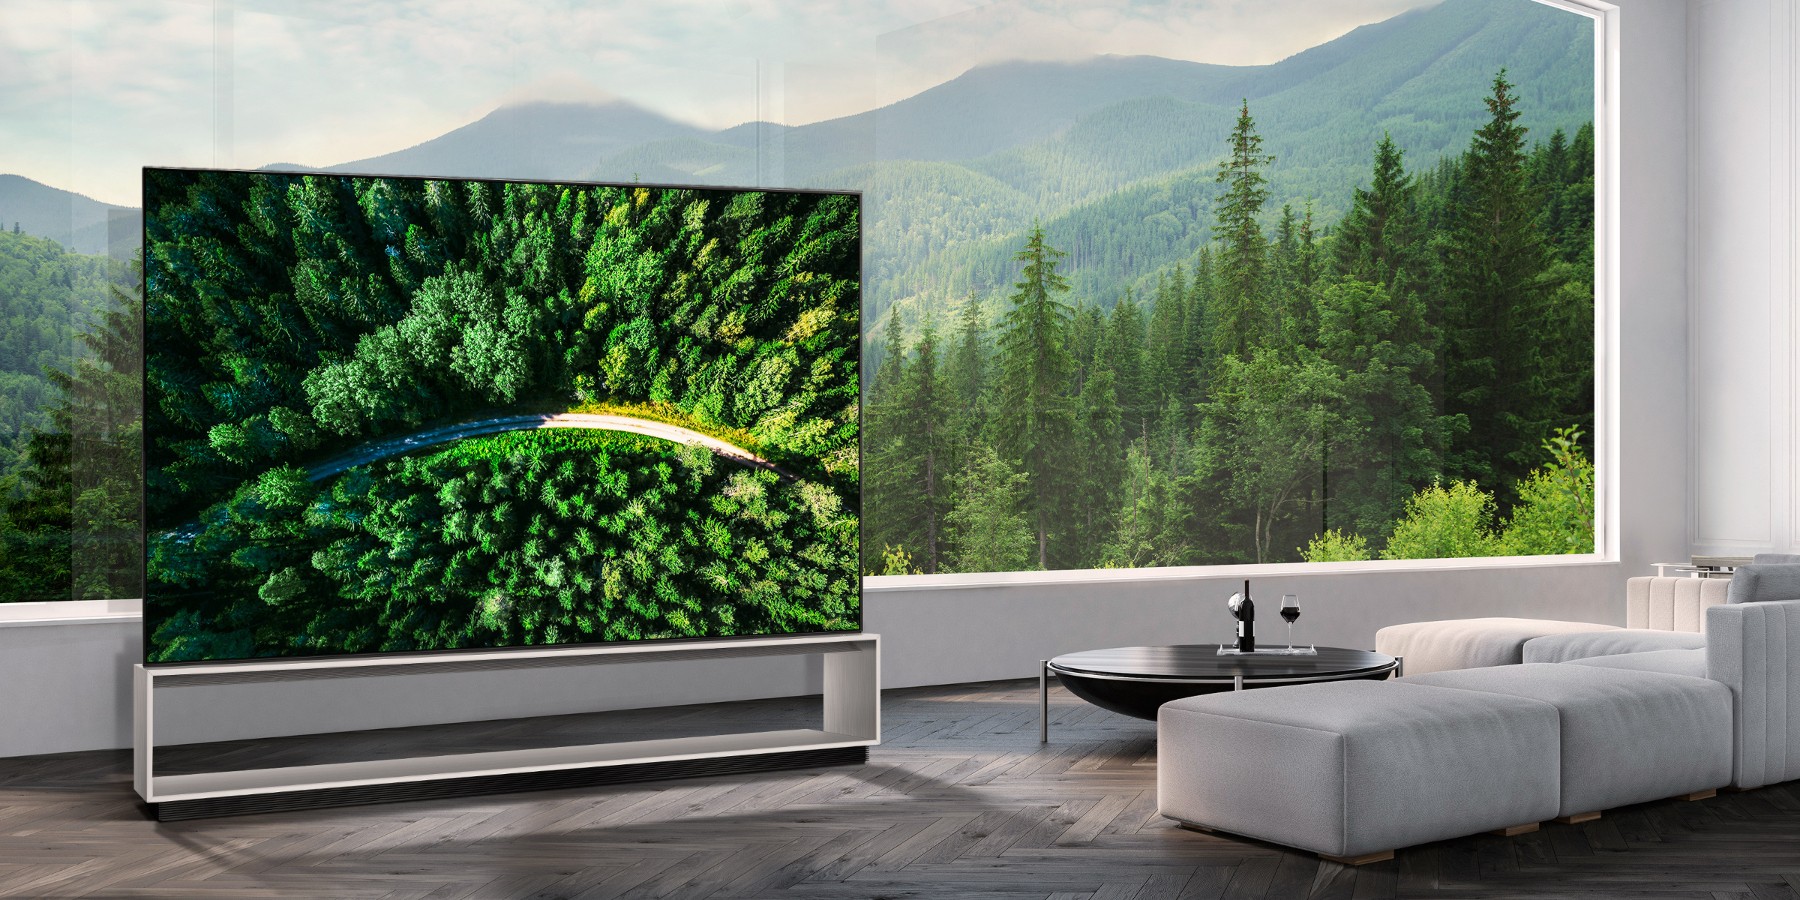 LG-8K-OLED-TV-001.jpg